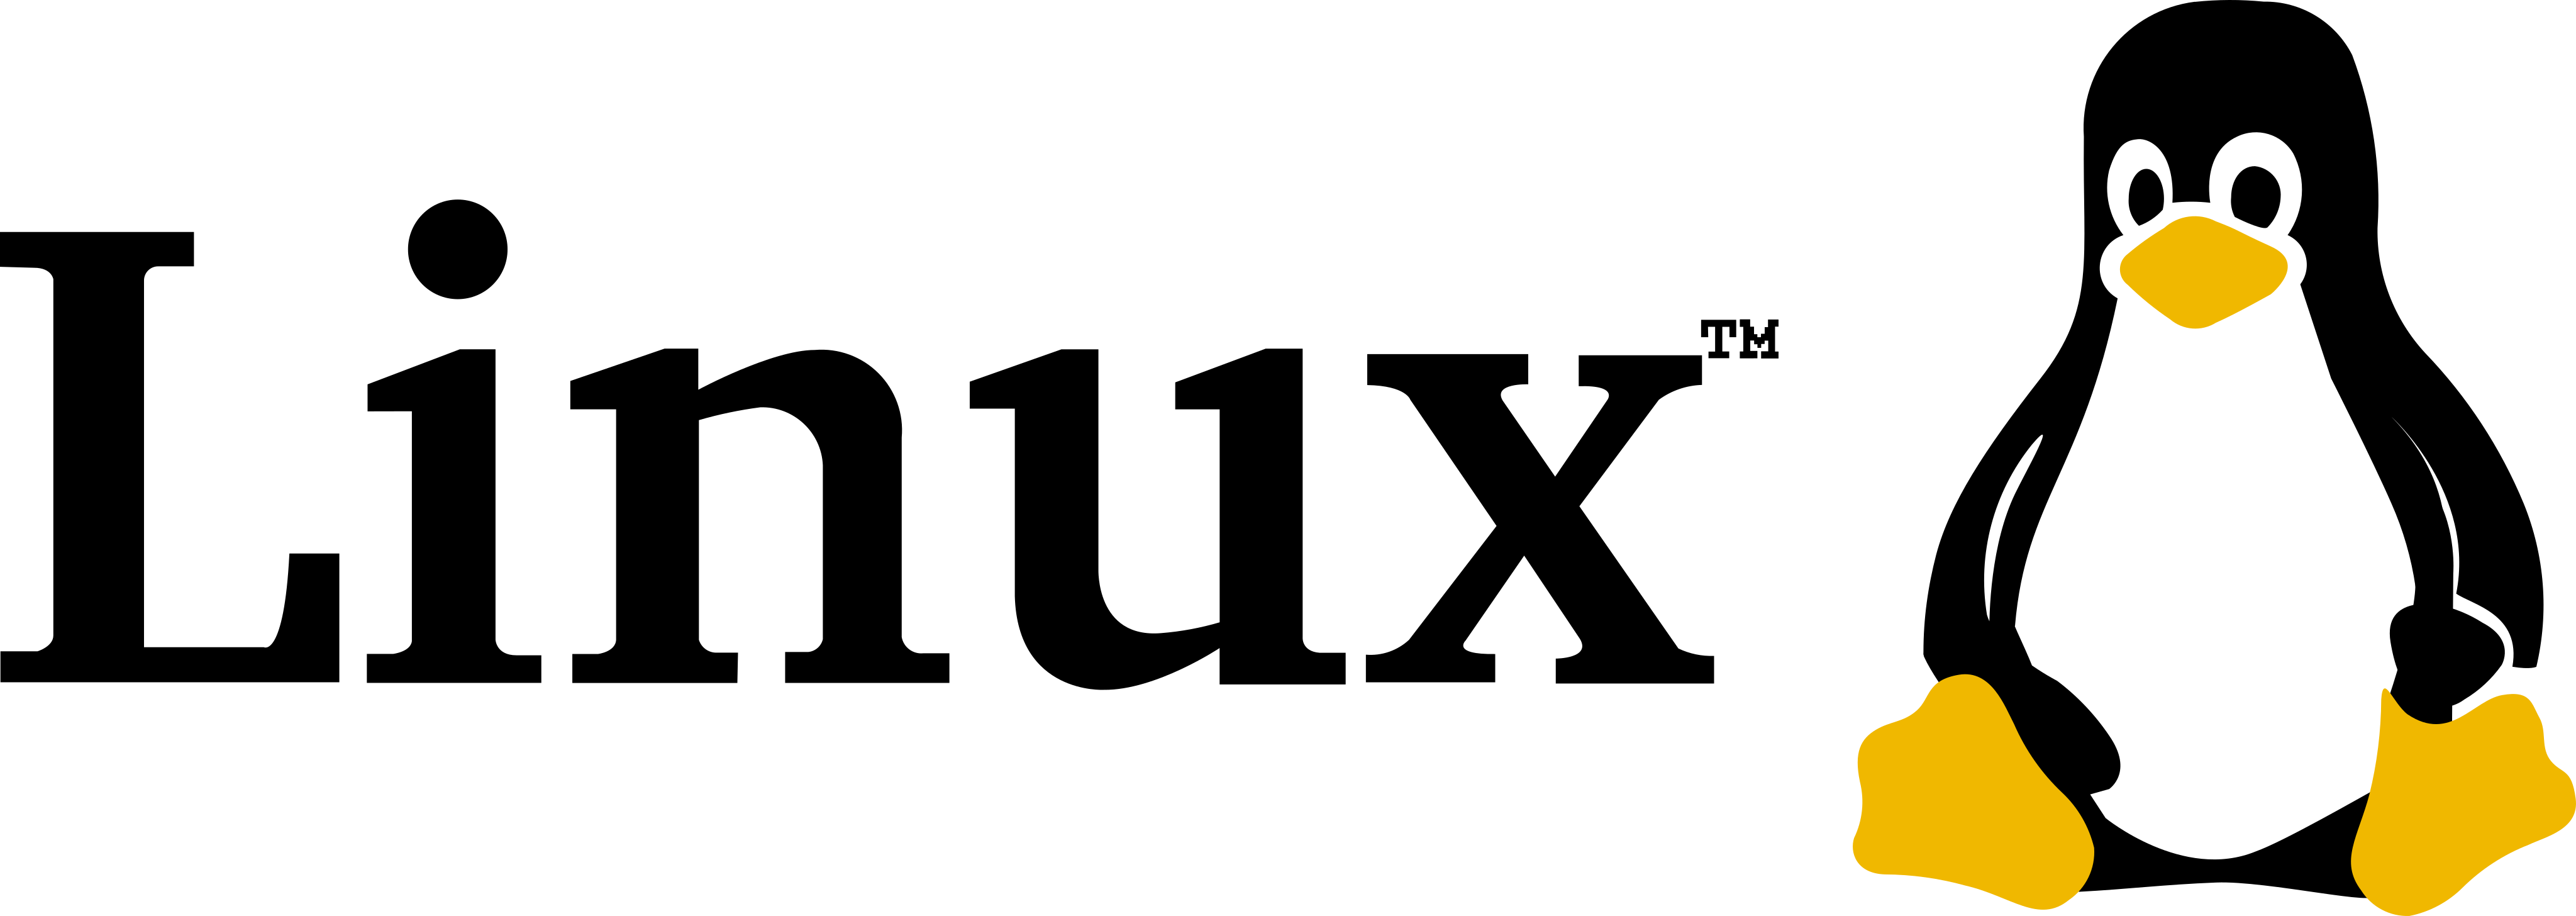 linux logo - Linux Logo